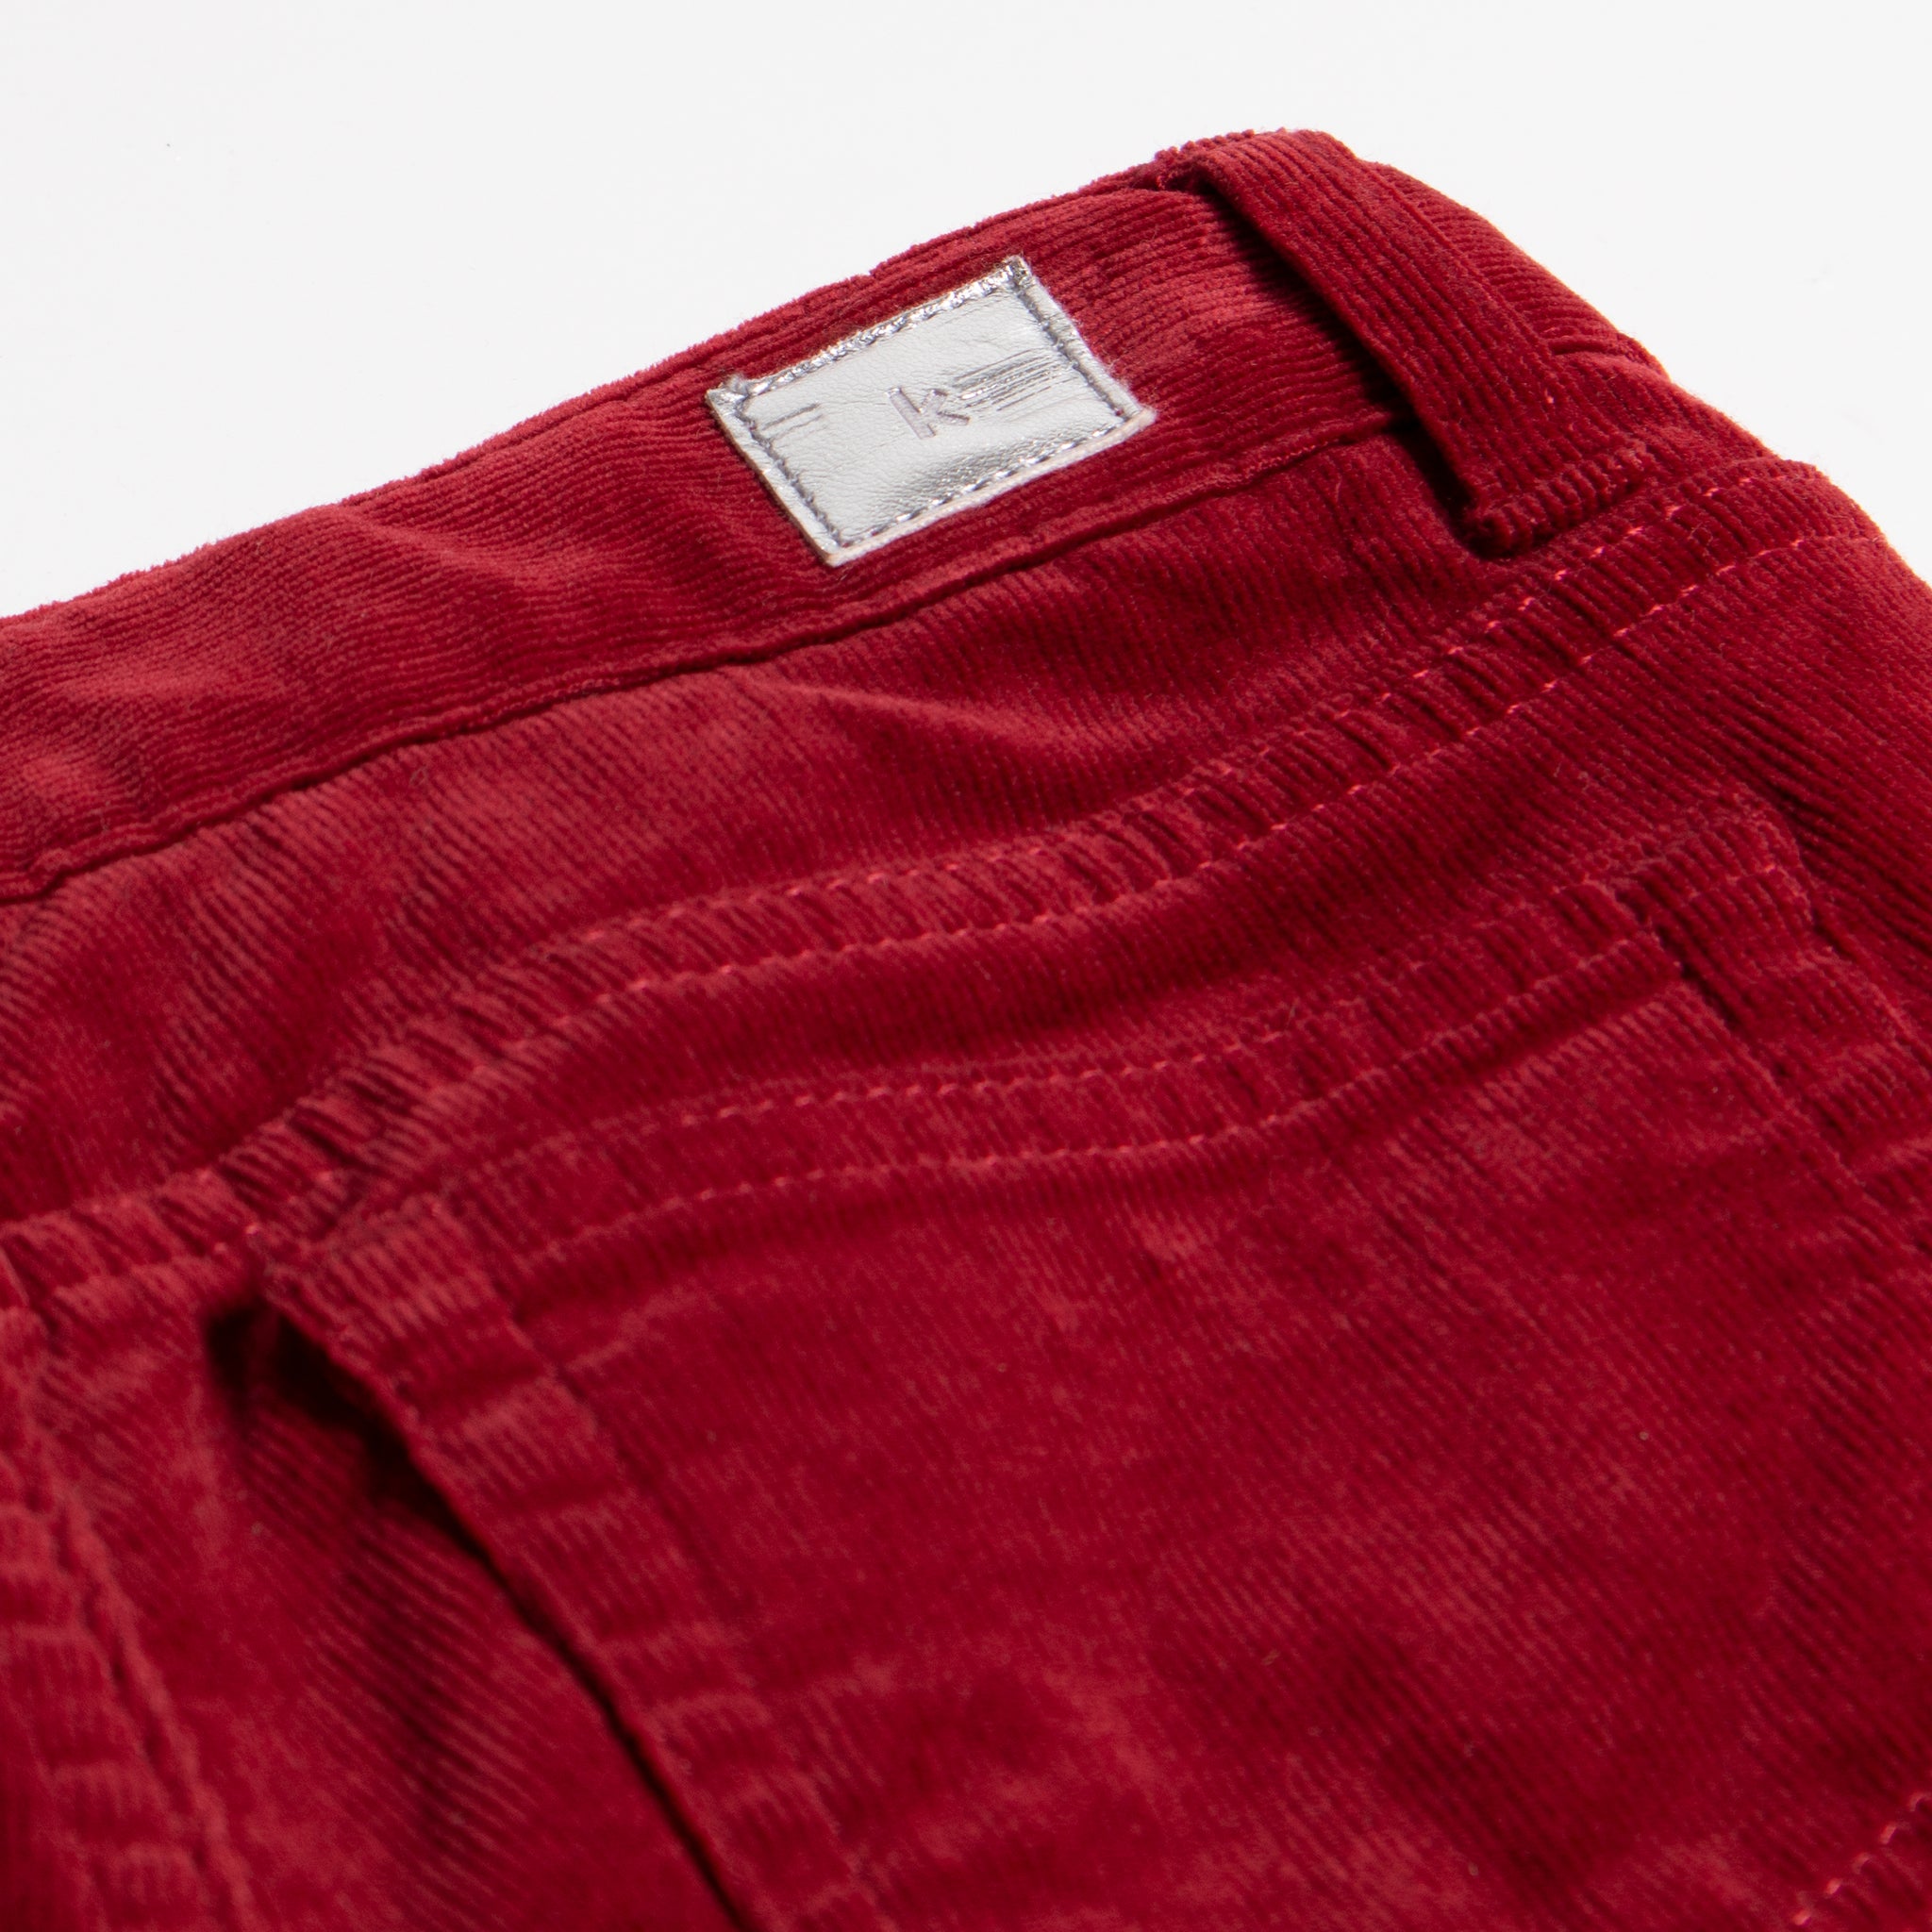 KIDPIK Girls Corduroy 5 Pockets Super Soft Skinny Pant, Size: 12 Months ...